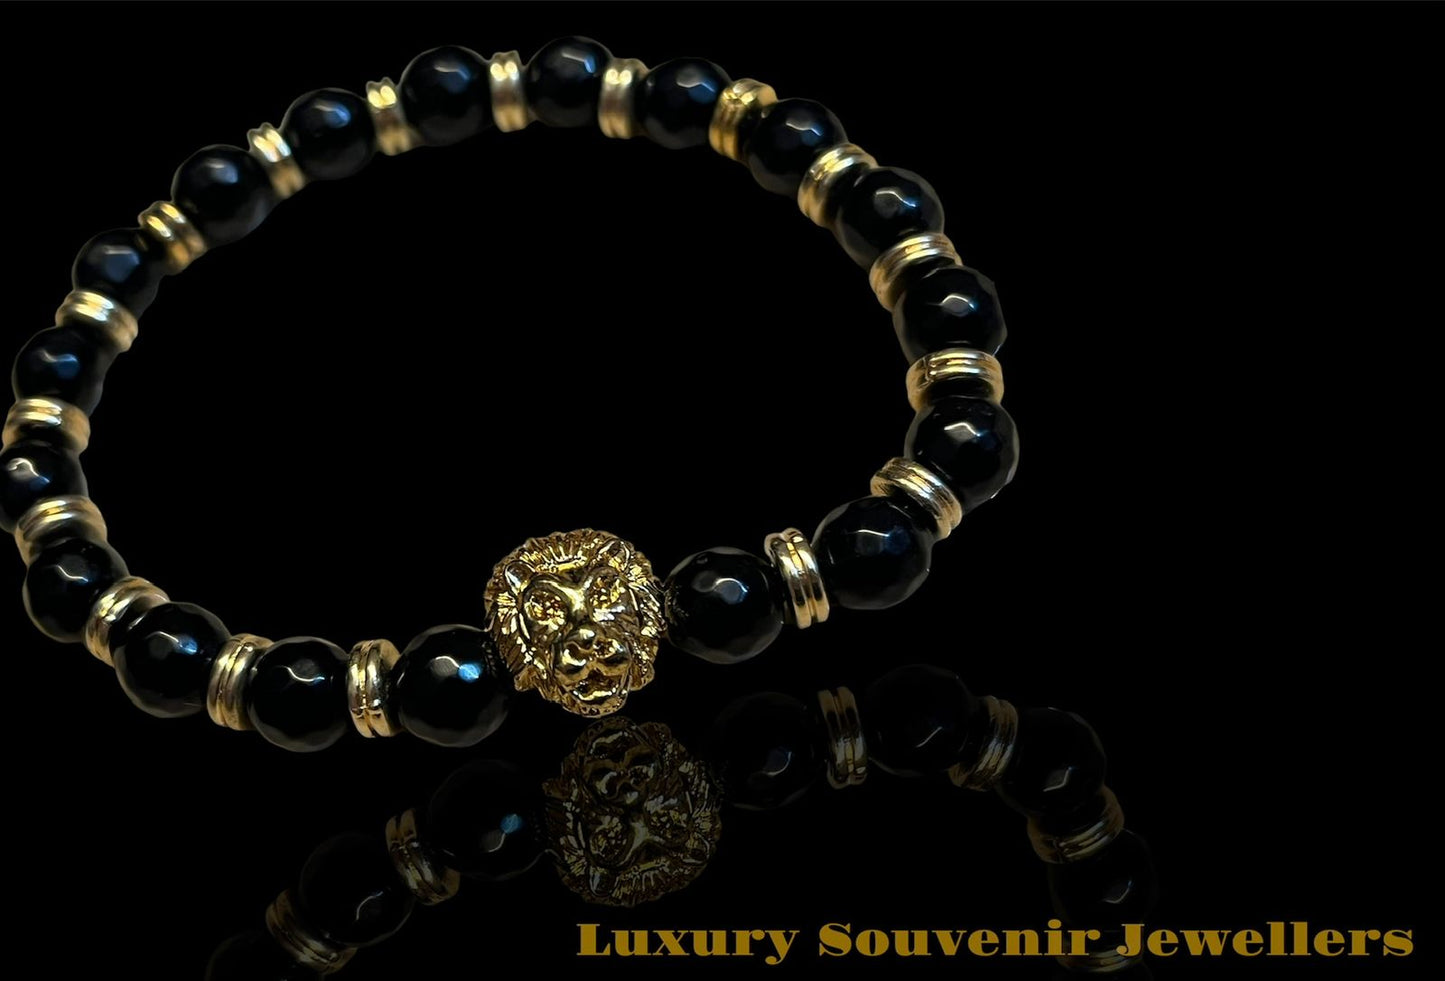 Sanjay Dutt LIONROAR Bracelet Classic